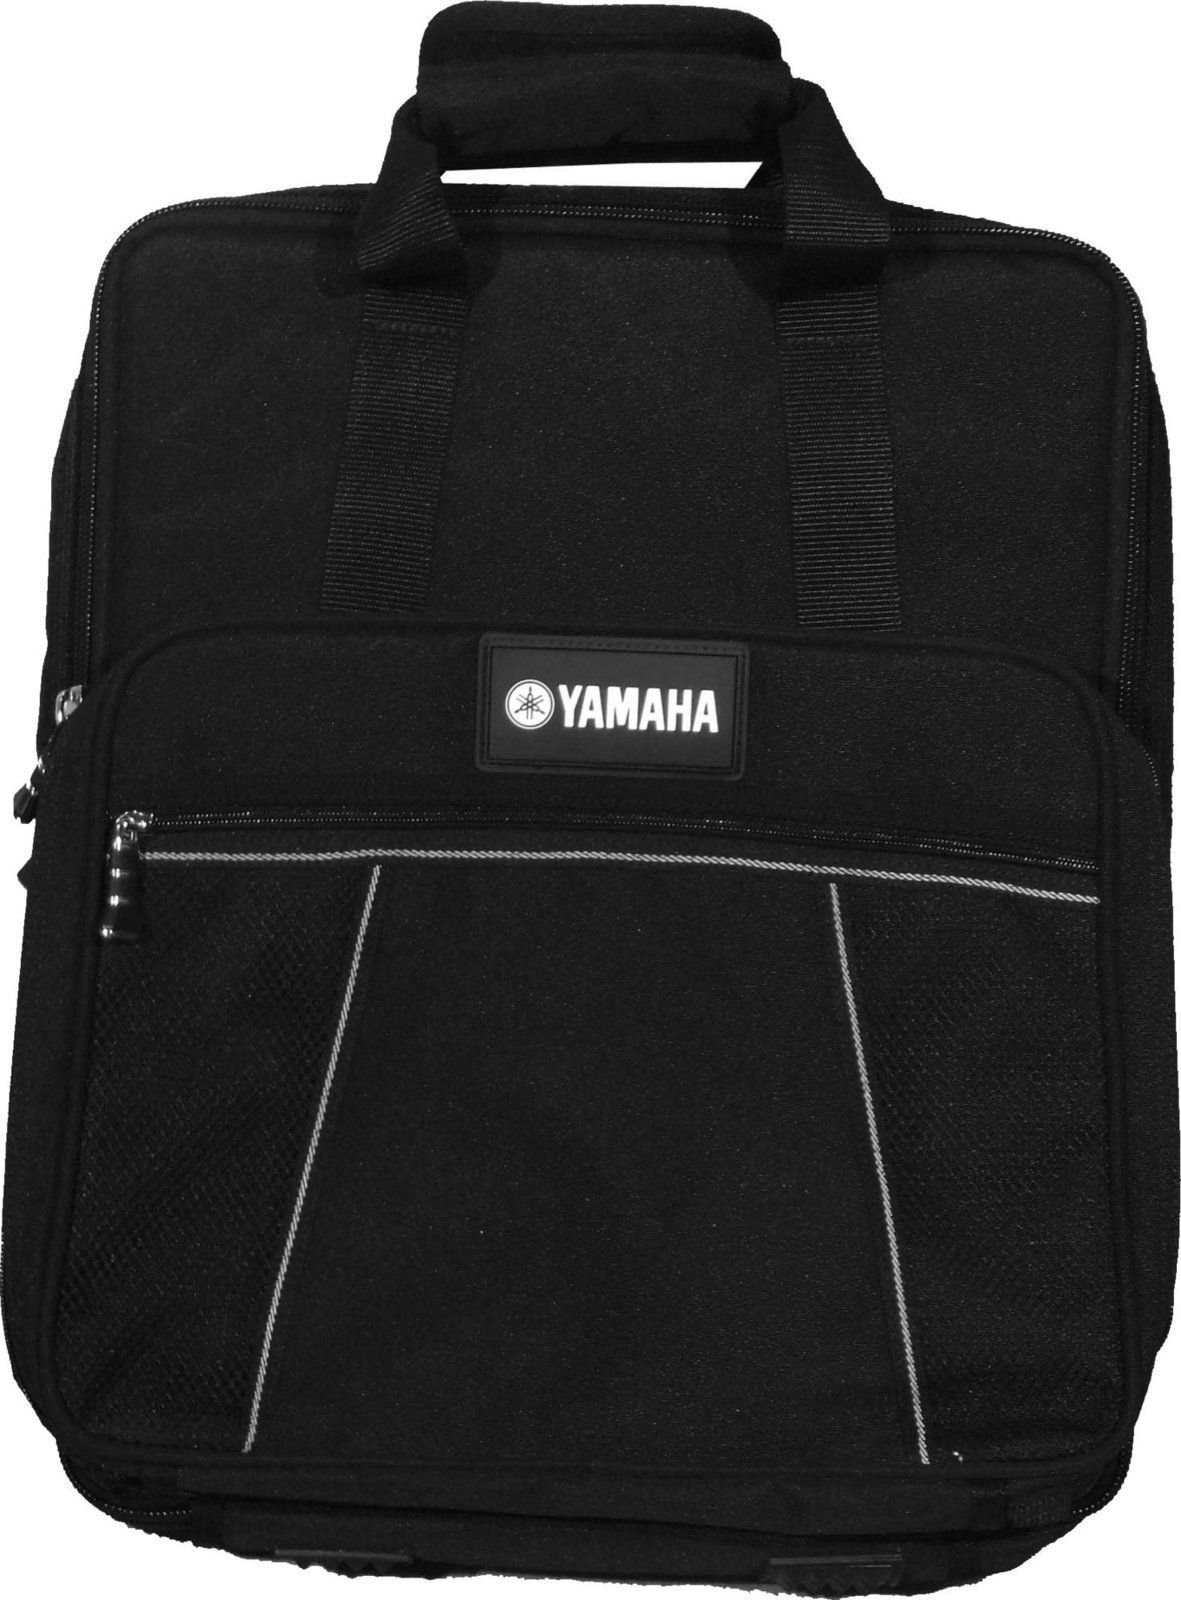 Tasche / Koffer für Audiogeräte Yamaha SCMG12